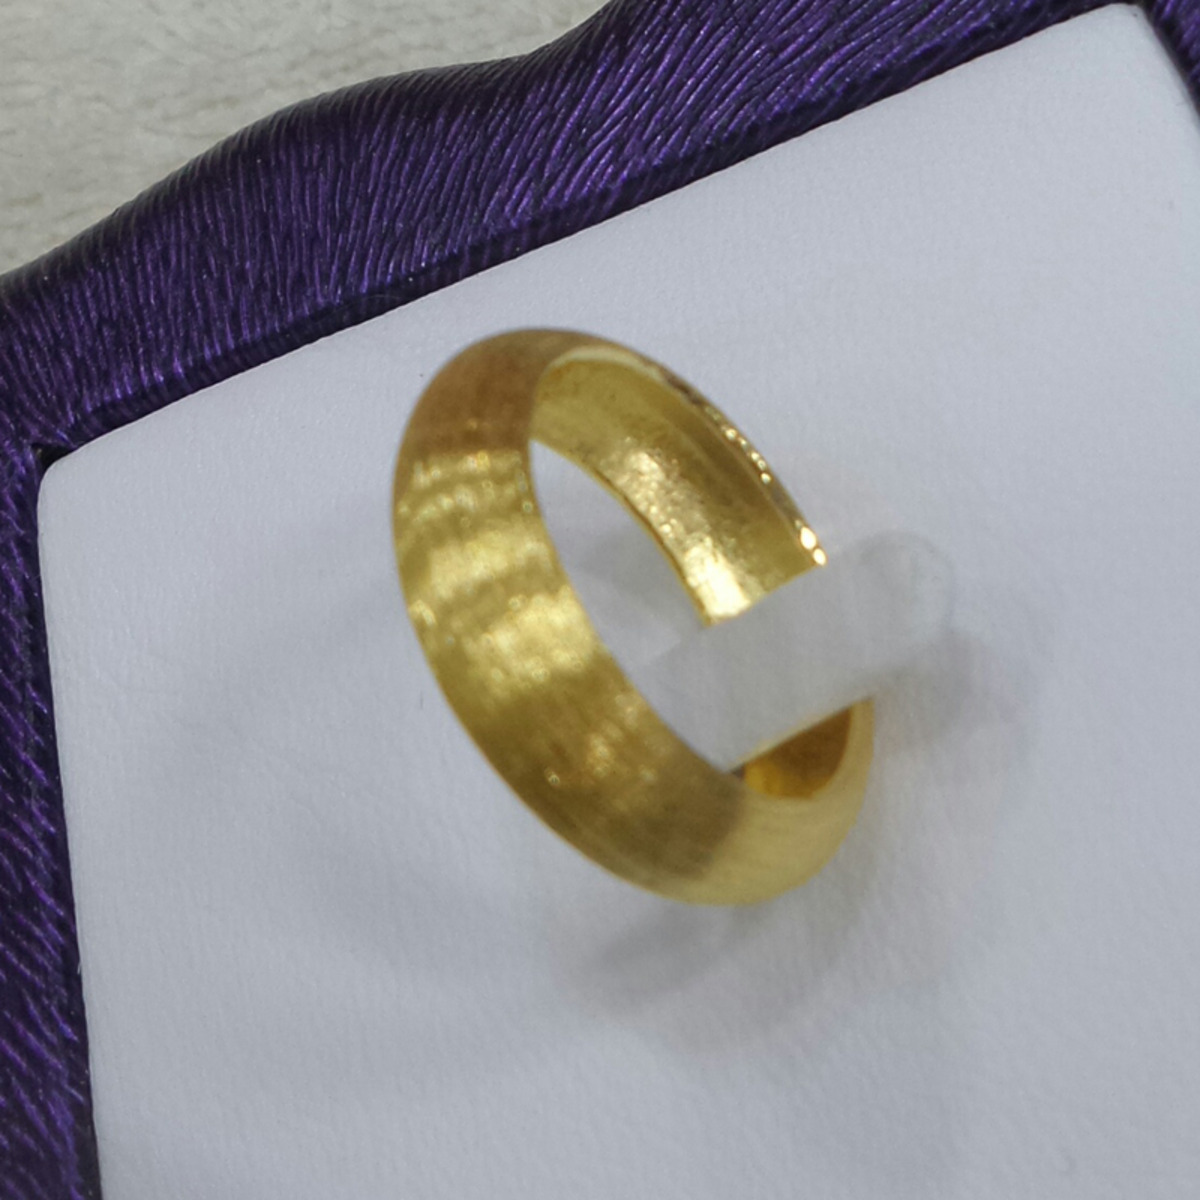 gold rings | gold rings online | gold rings for women | rings in gold | gold  fancy ring | gold ring for women | rings for women